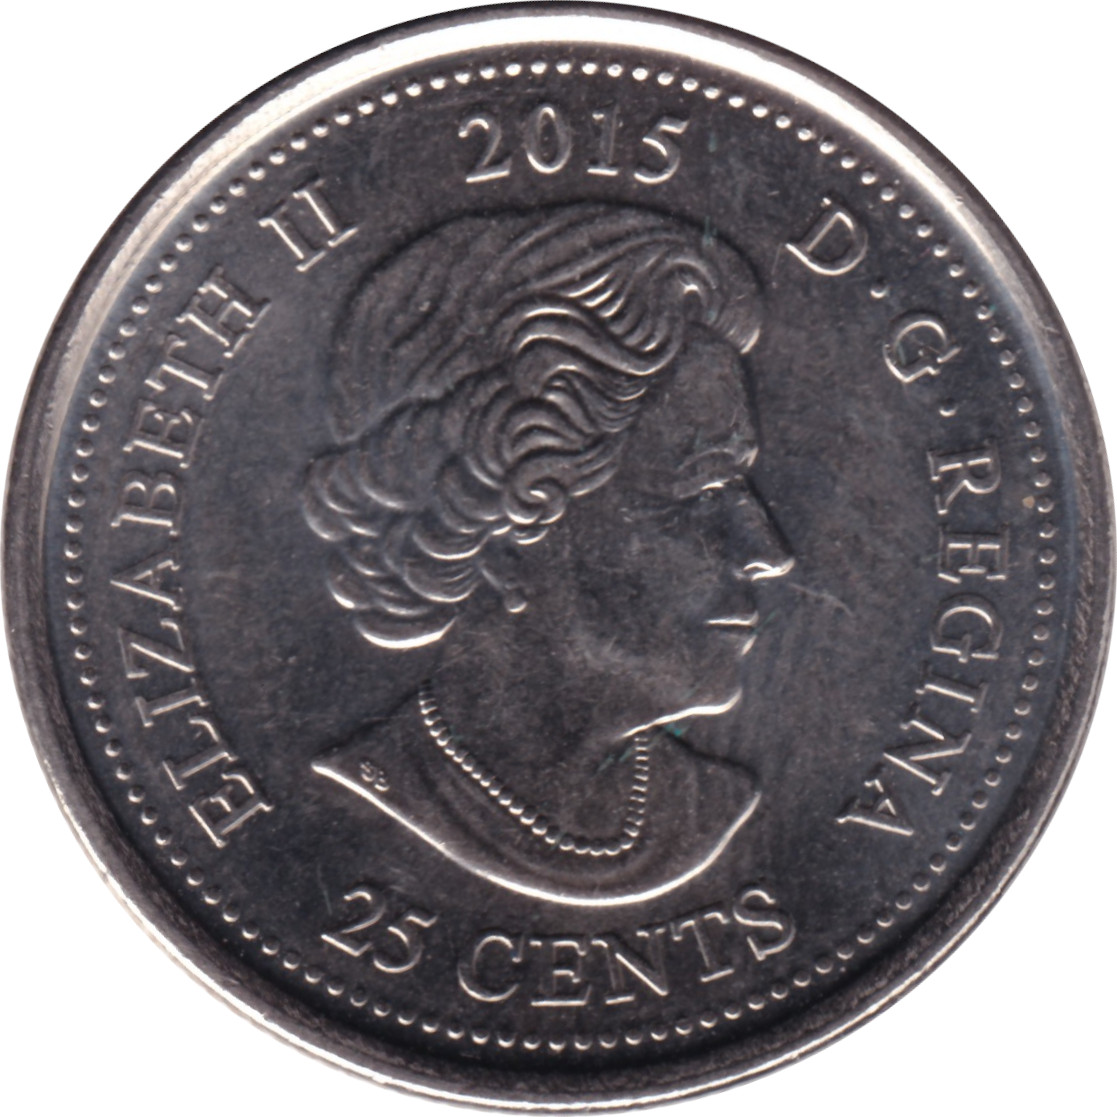 25 cents - Coquelicot